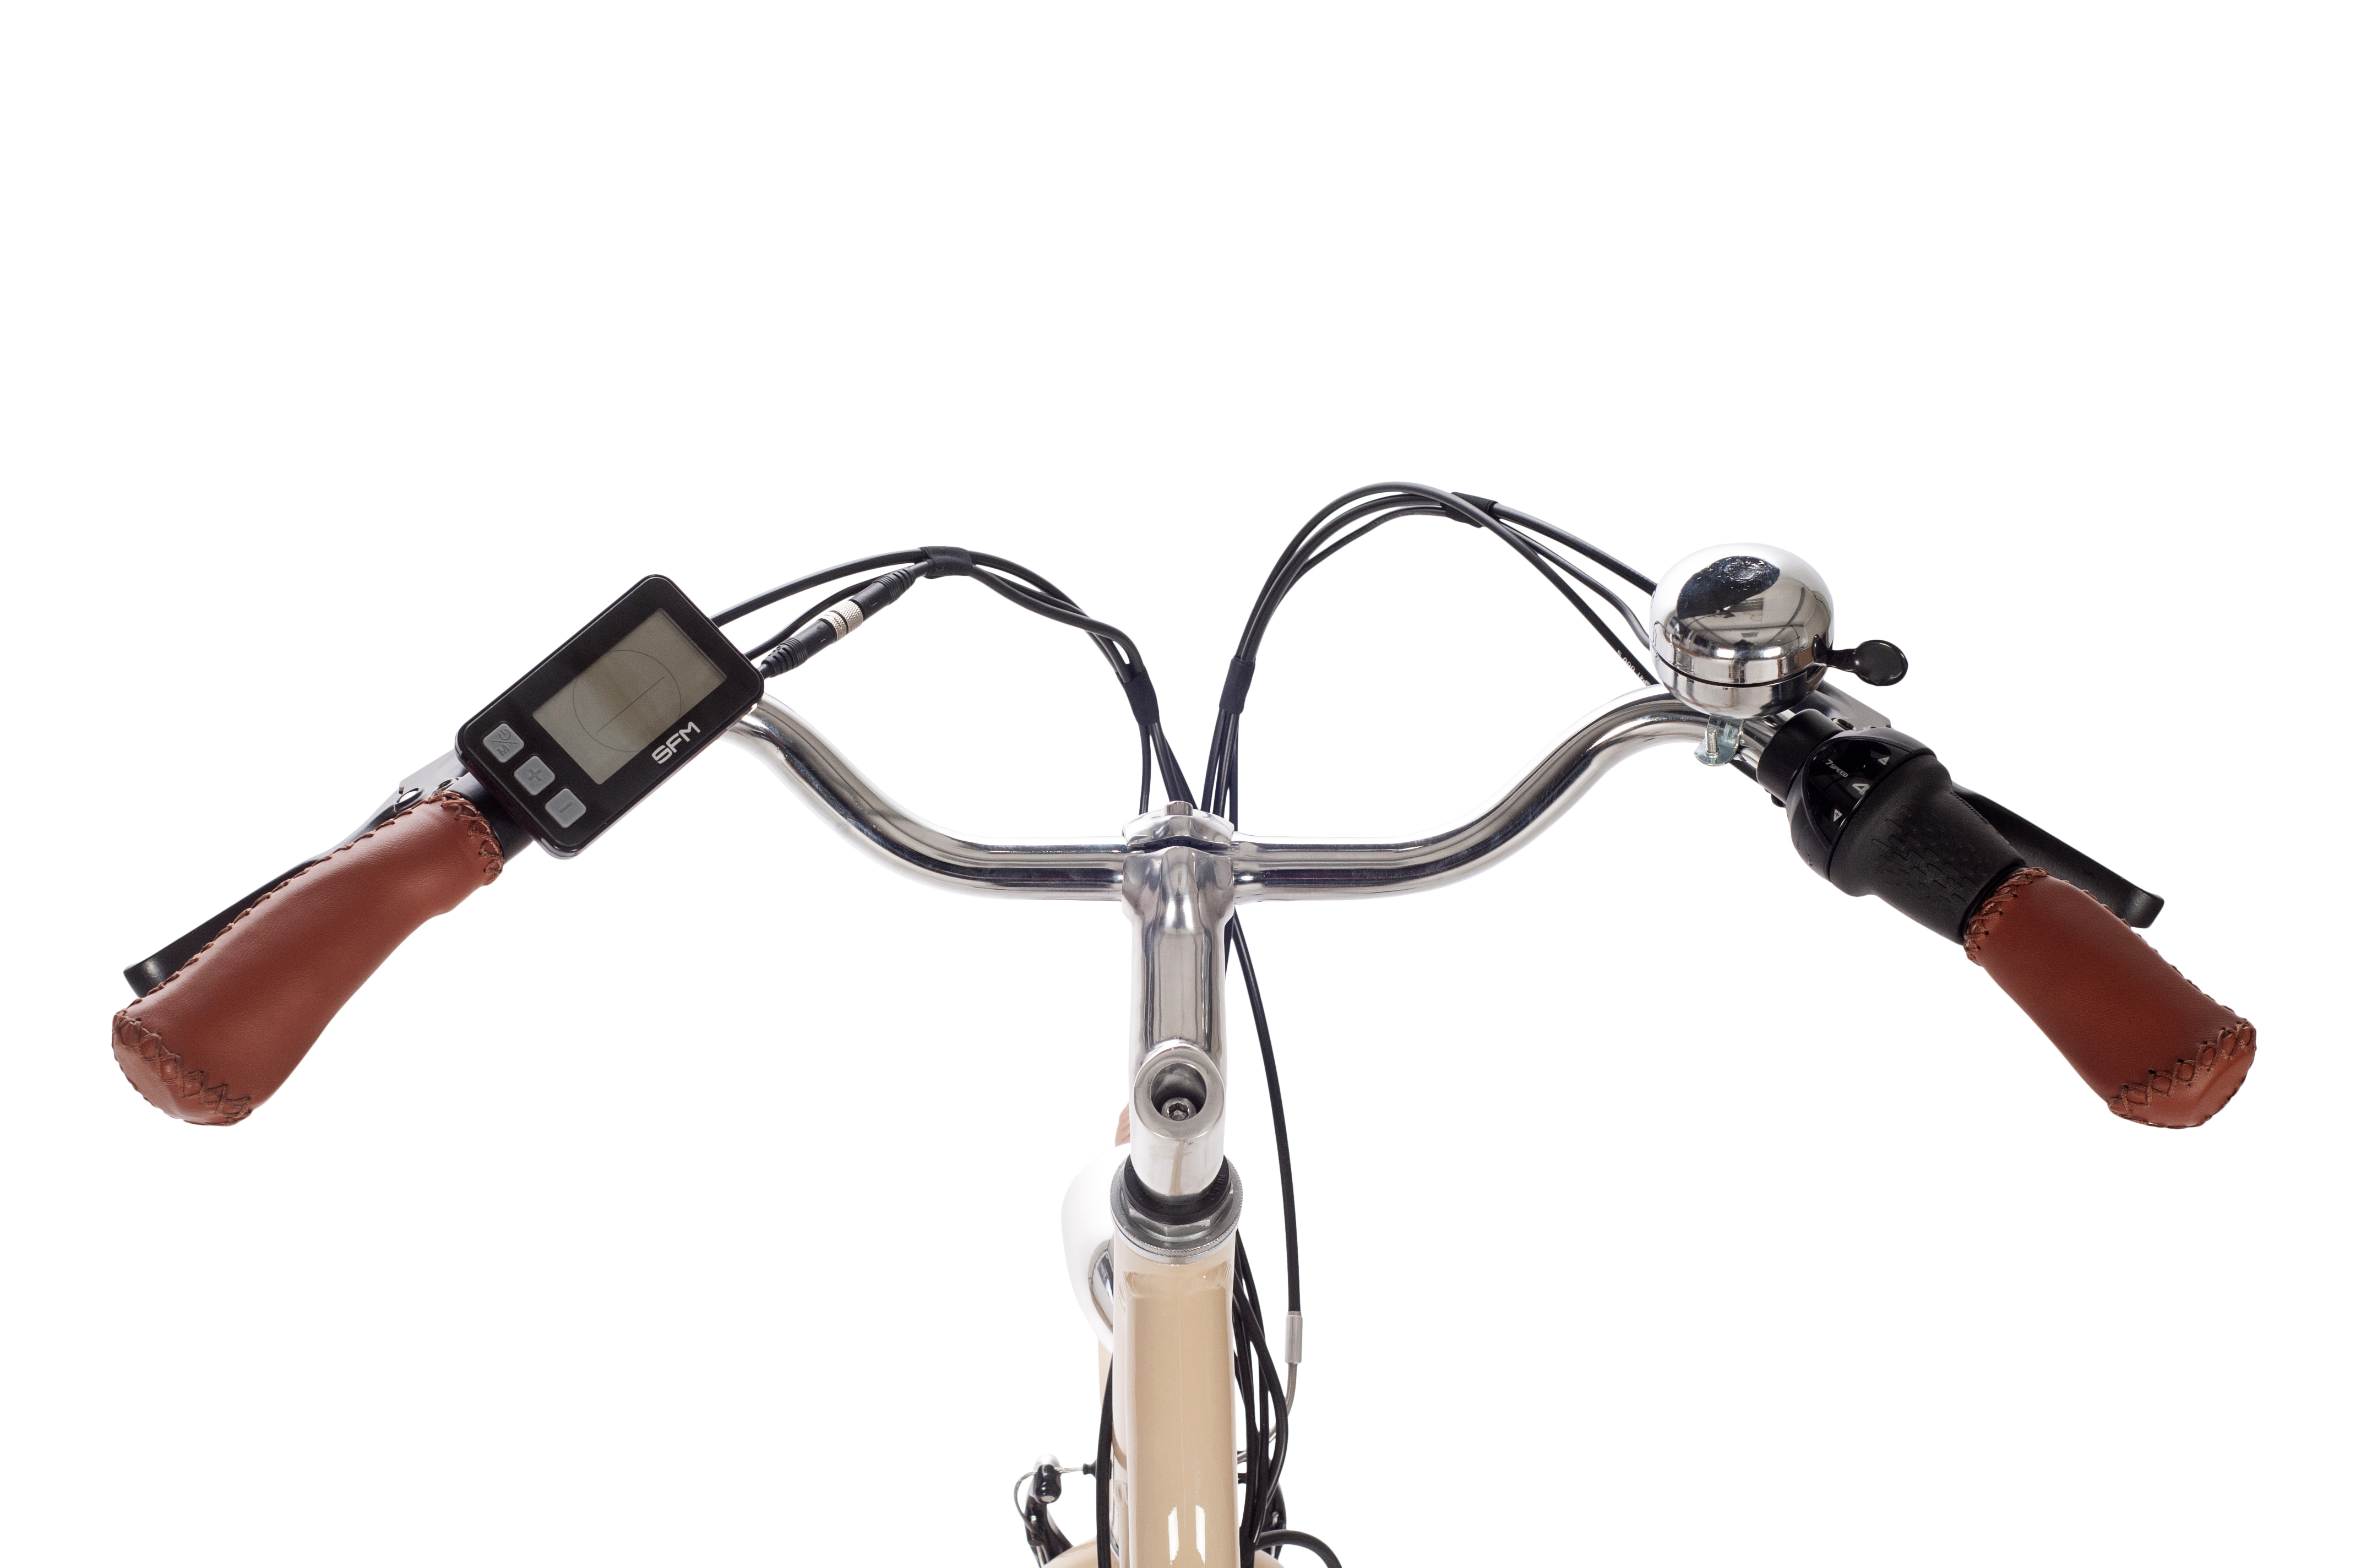 SAXXX CLASSIC PLUS 2.0 E-Bike mit Rücktrittbremse